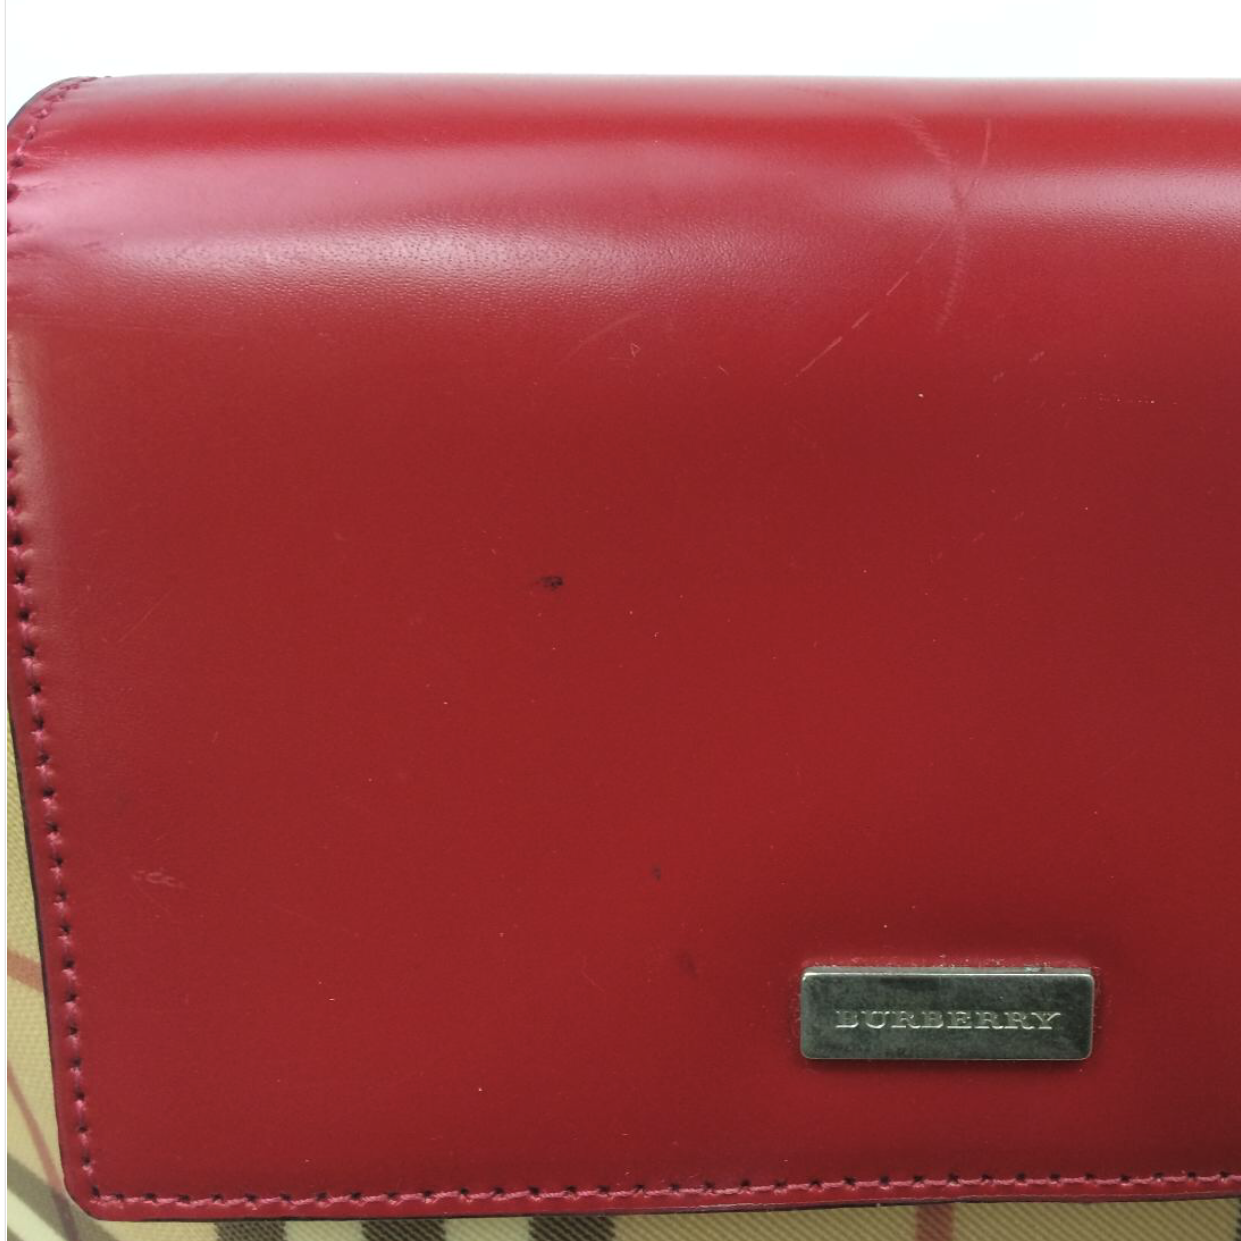 Guaranteed Authentic Luxury - Burberry Haymarket Check Hobo Shoulder Bag –  Just Gorgeous Studio